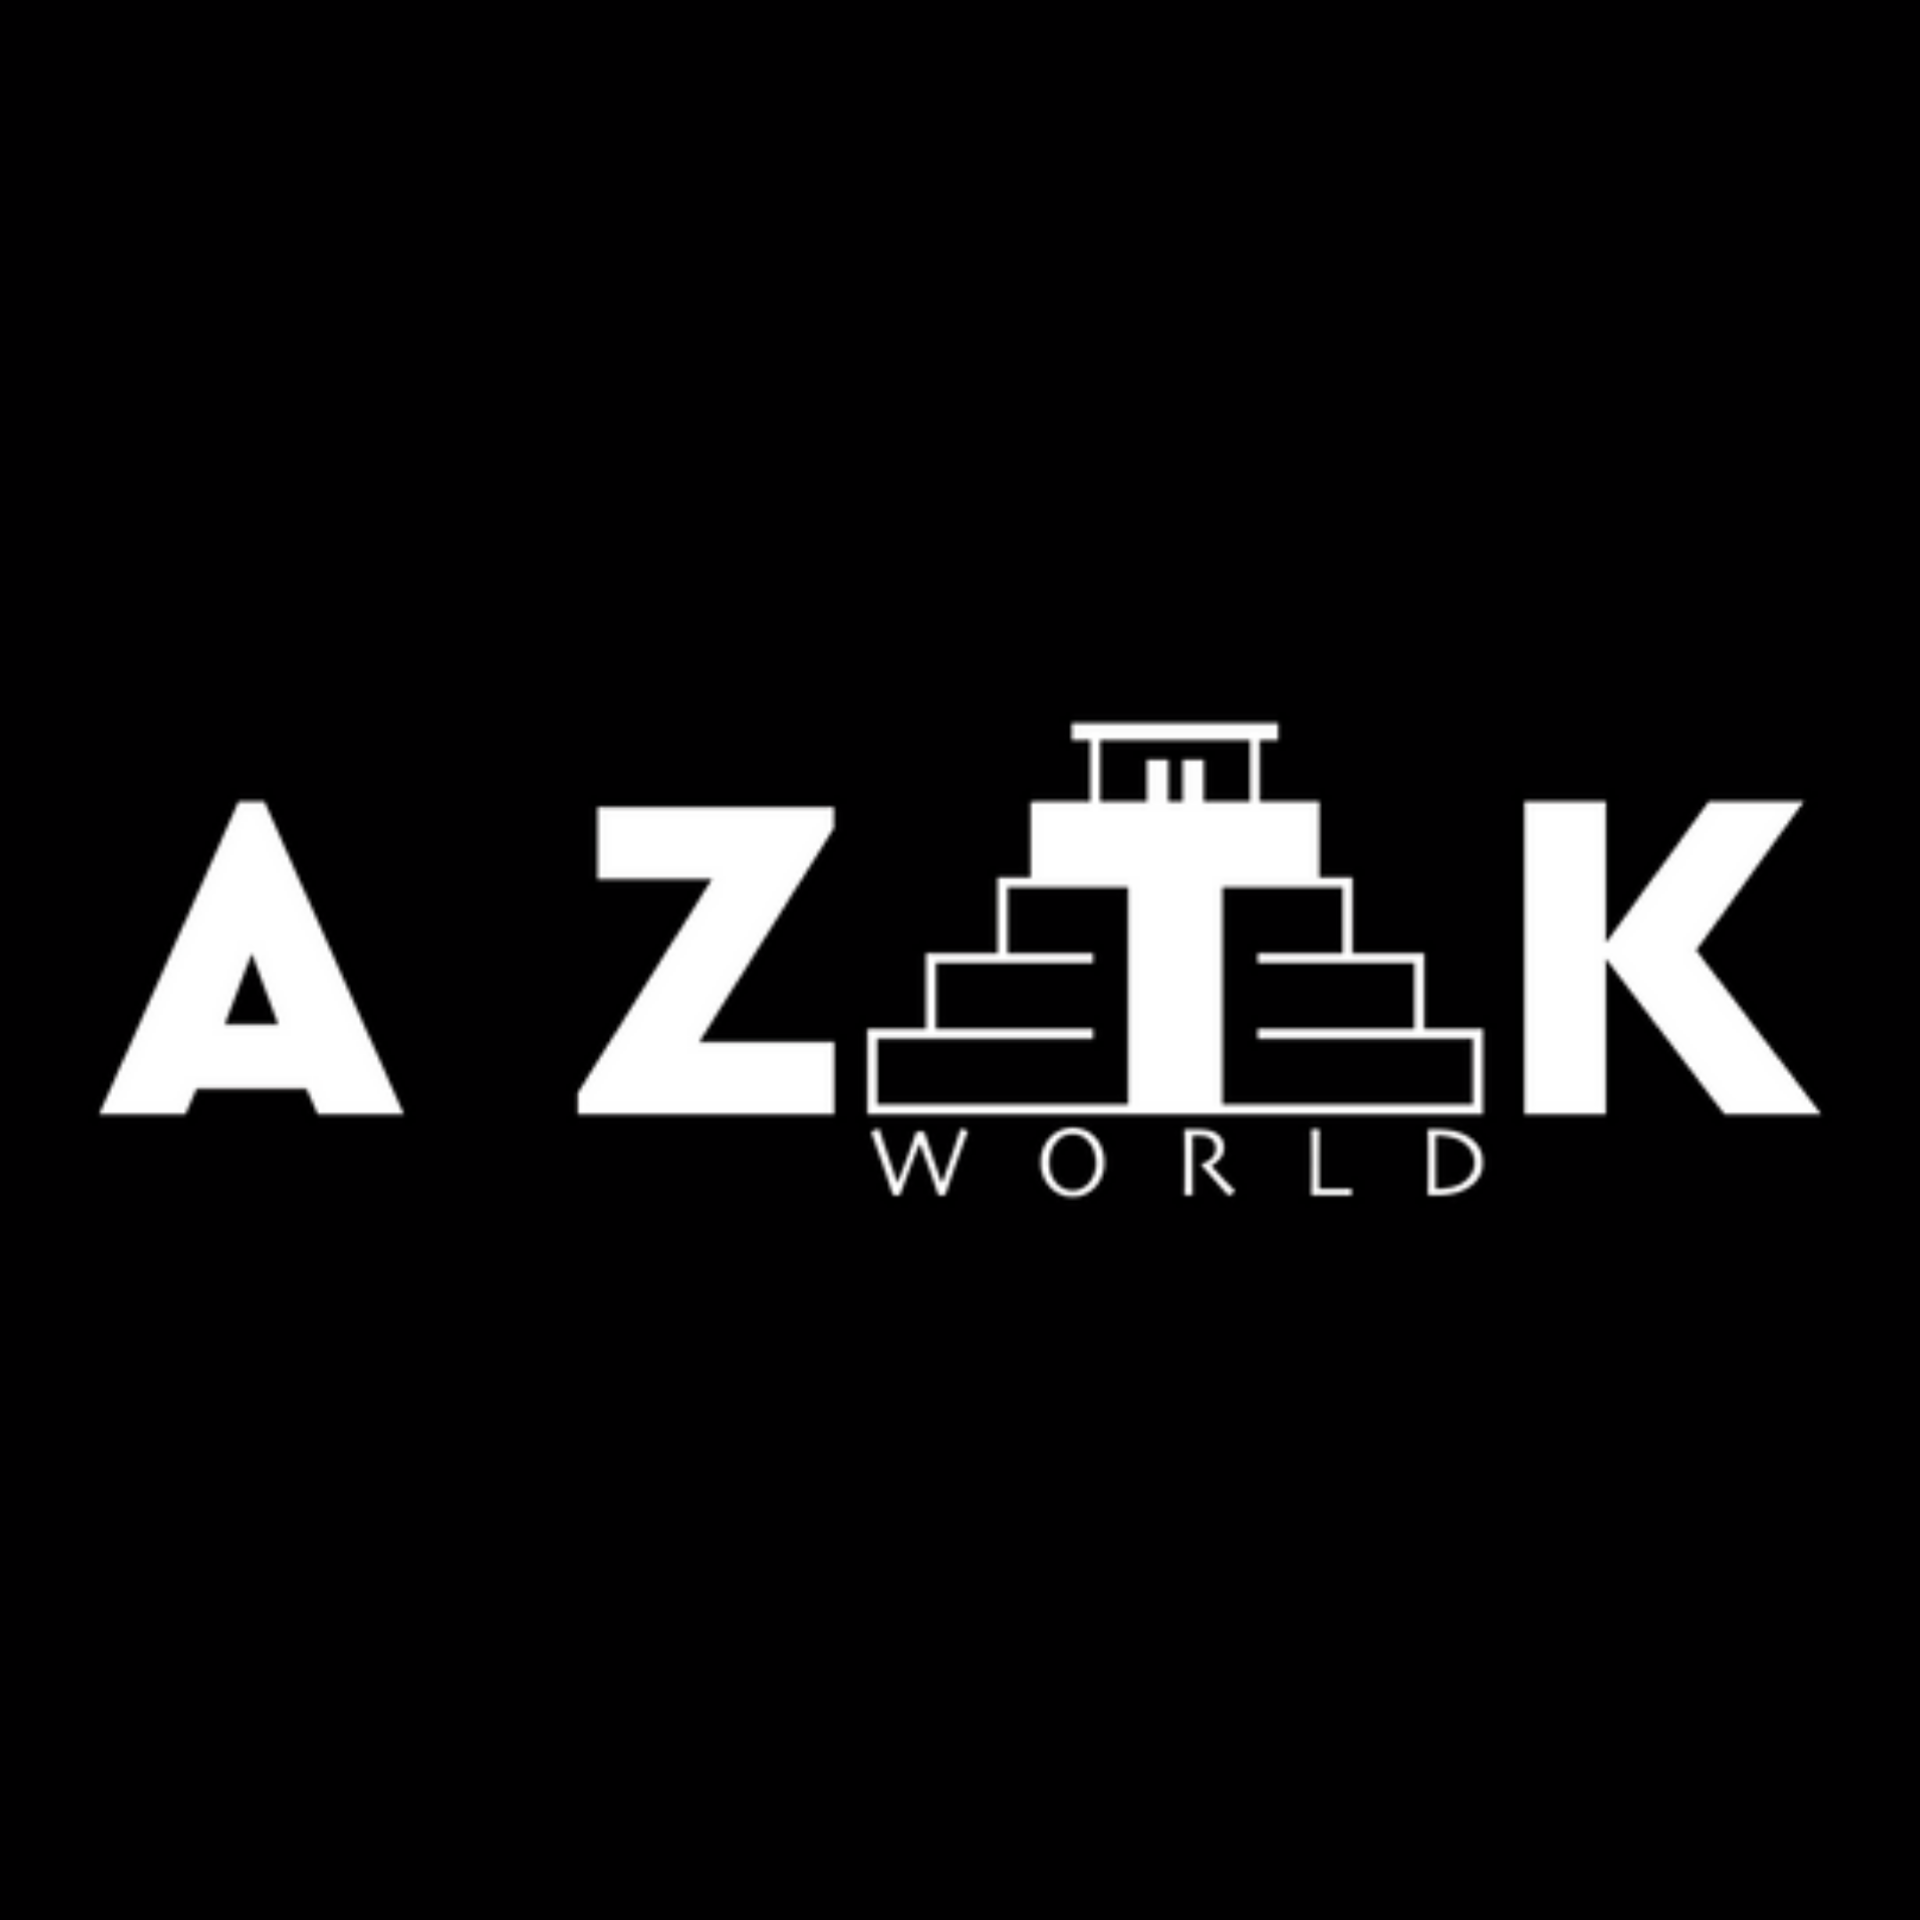 AZTK WORLD